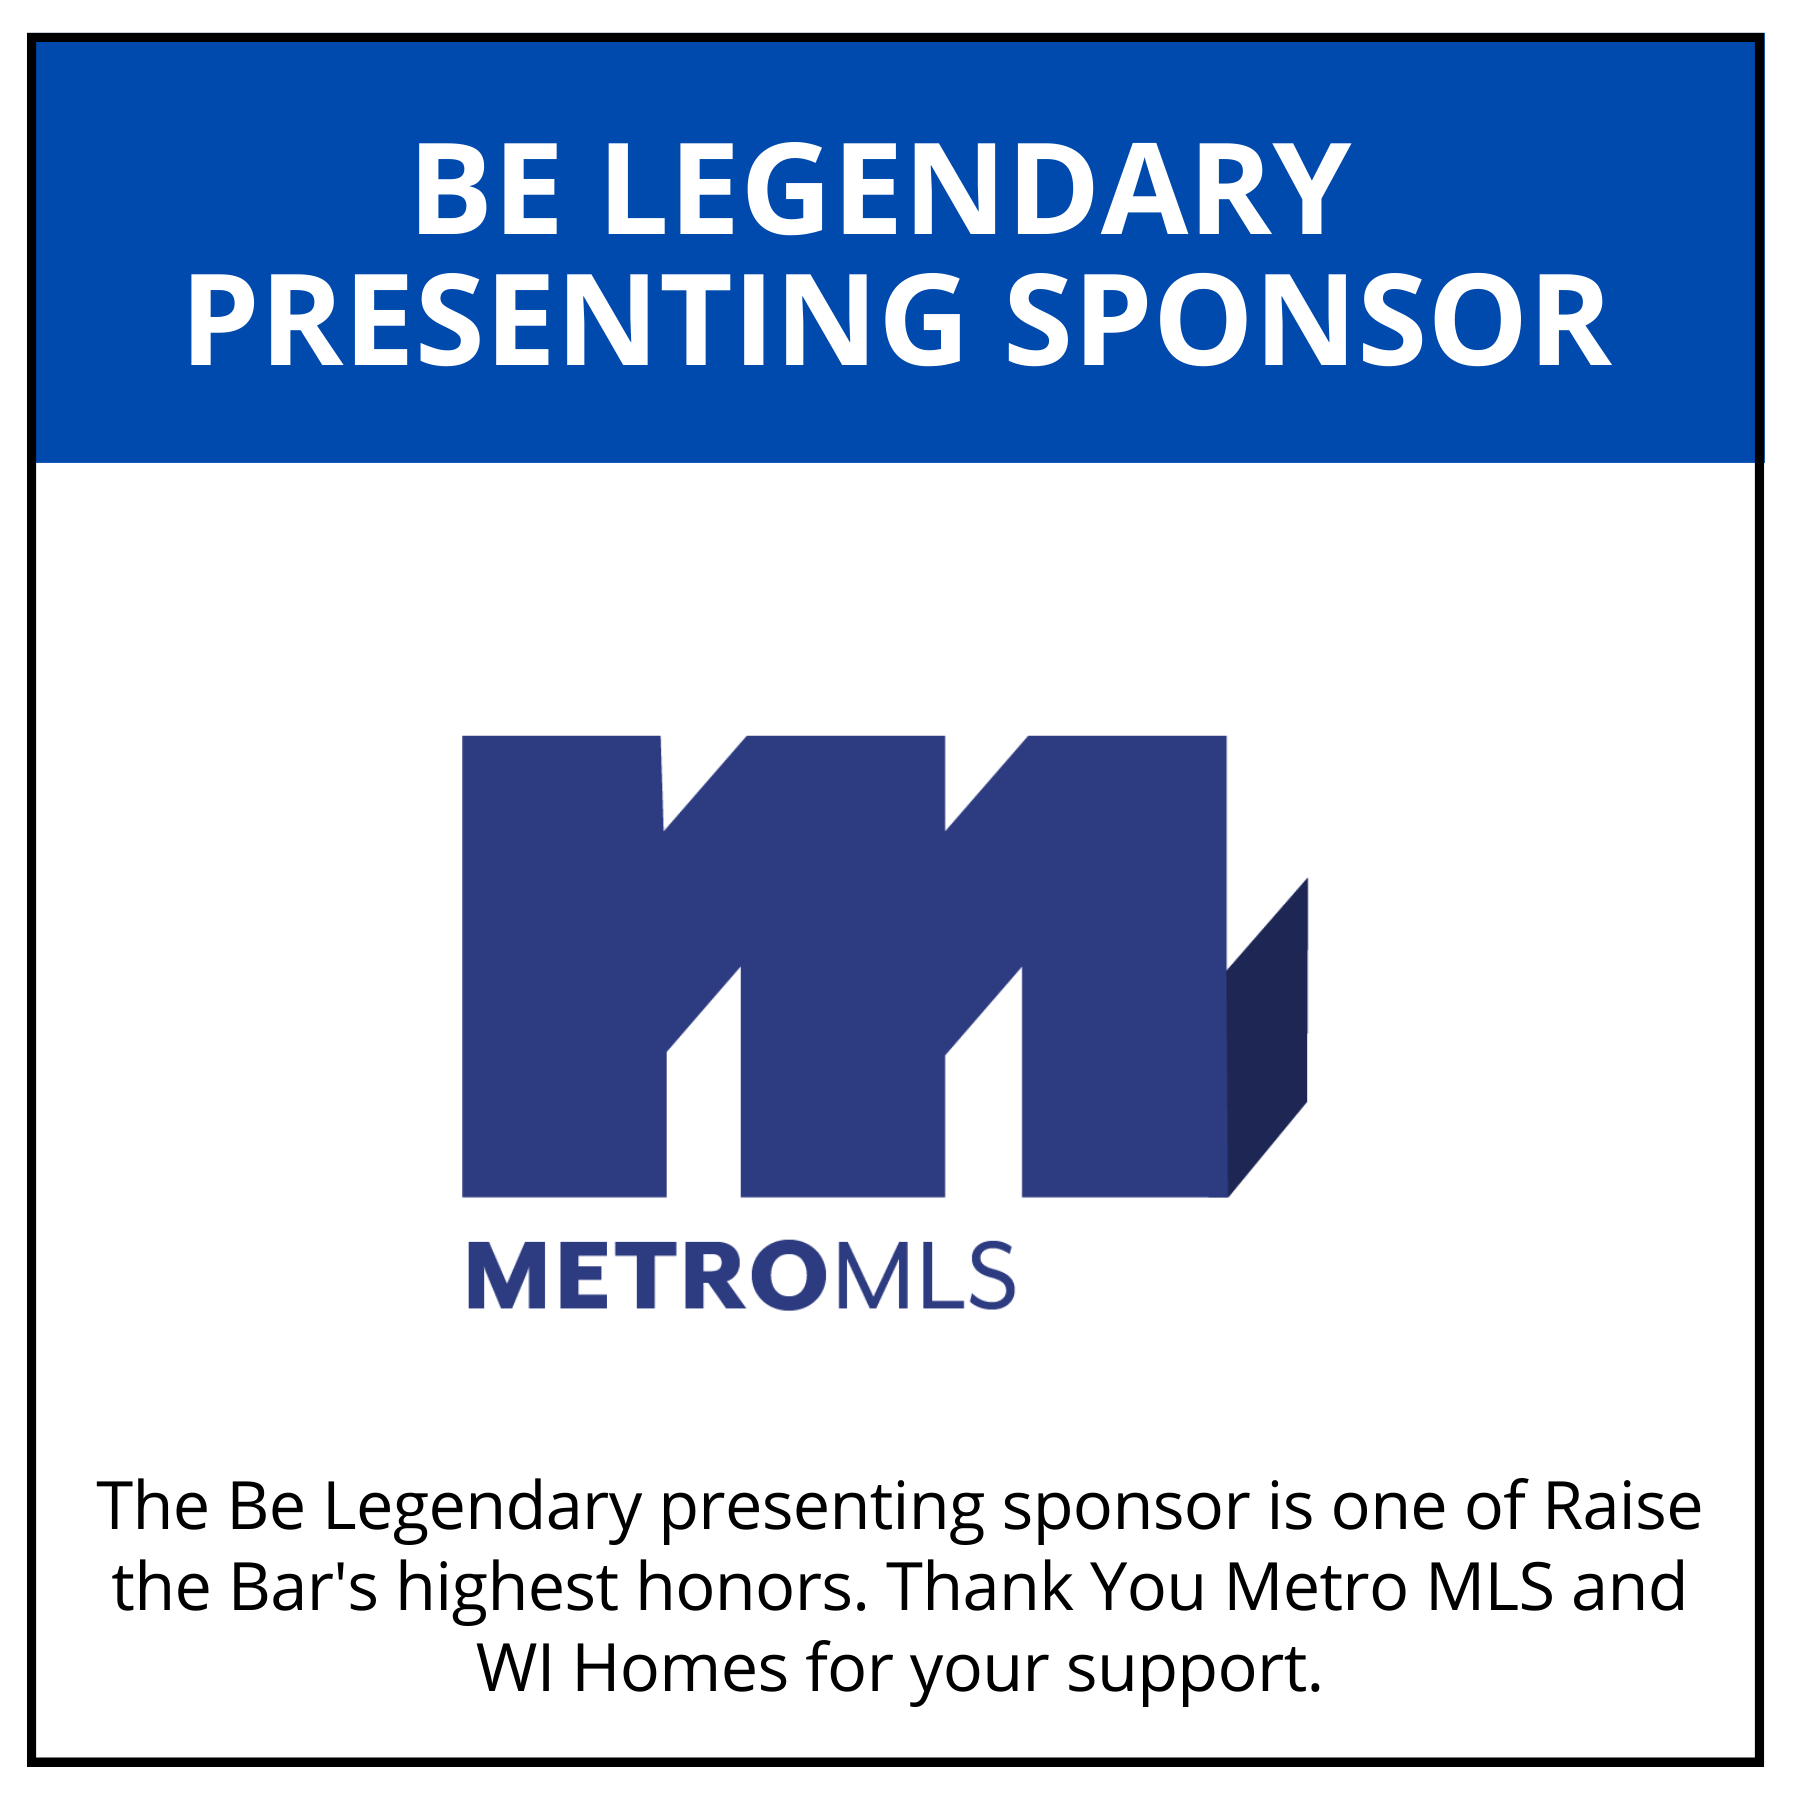 Metro MLS